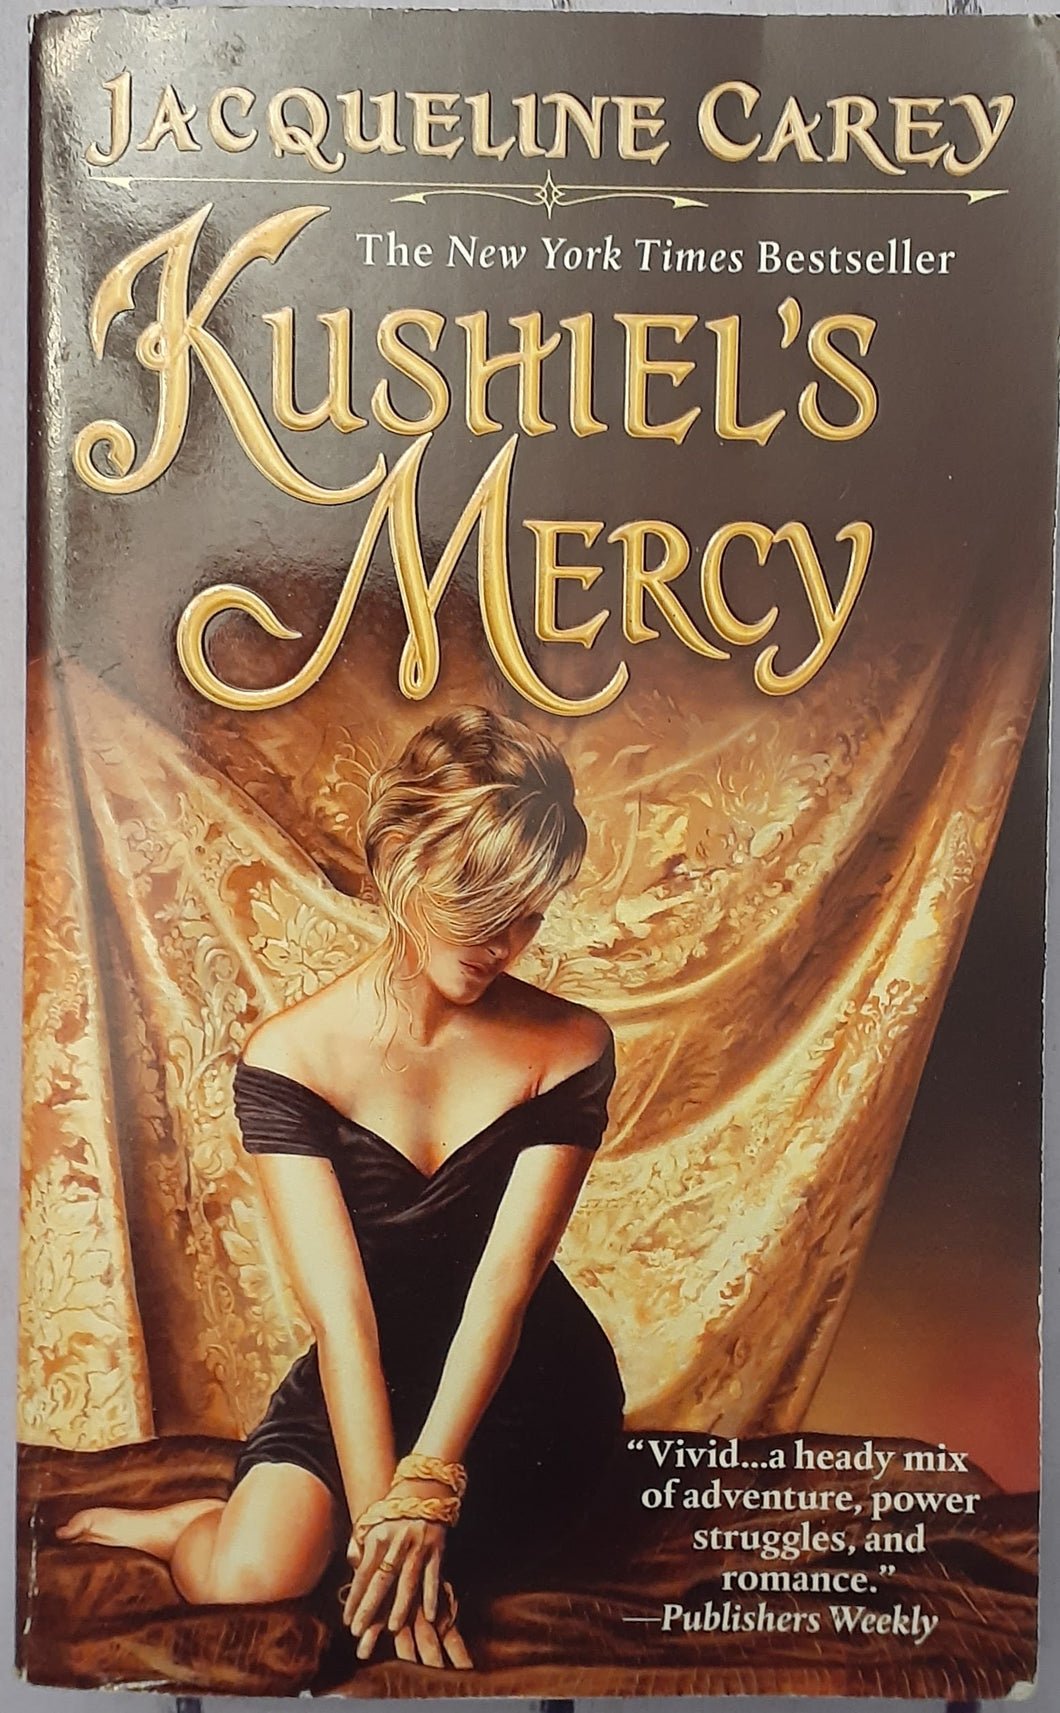 Kushiel's Mercy (Imriel's Trilogy #3)